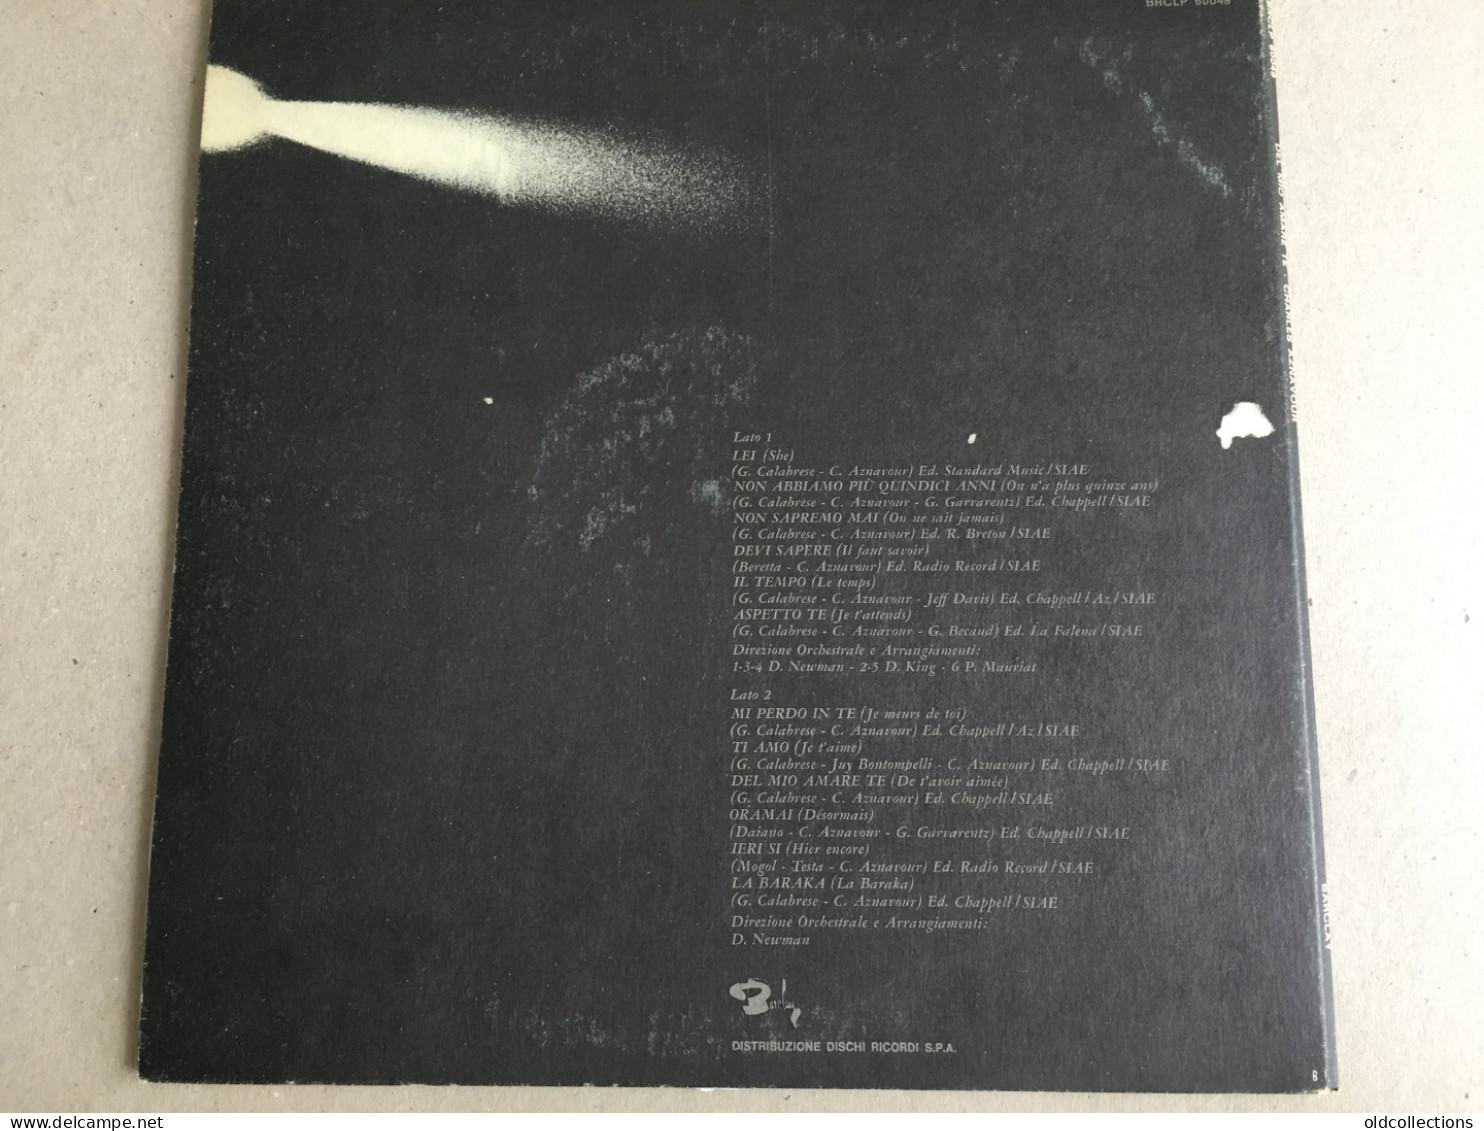 Schallplatte Vinyl Record Disque Vinyle LP Record - Charles Aznavour Del Mio Amare Te - Vinyl + Album Photo - Sonstige - Italienische Musik